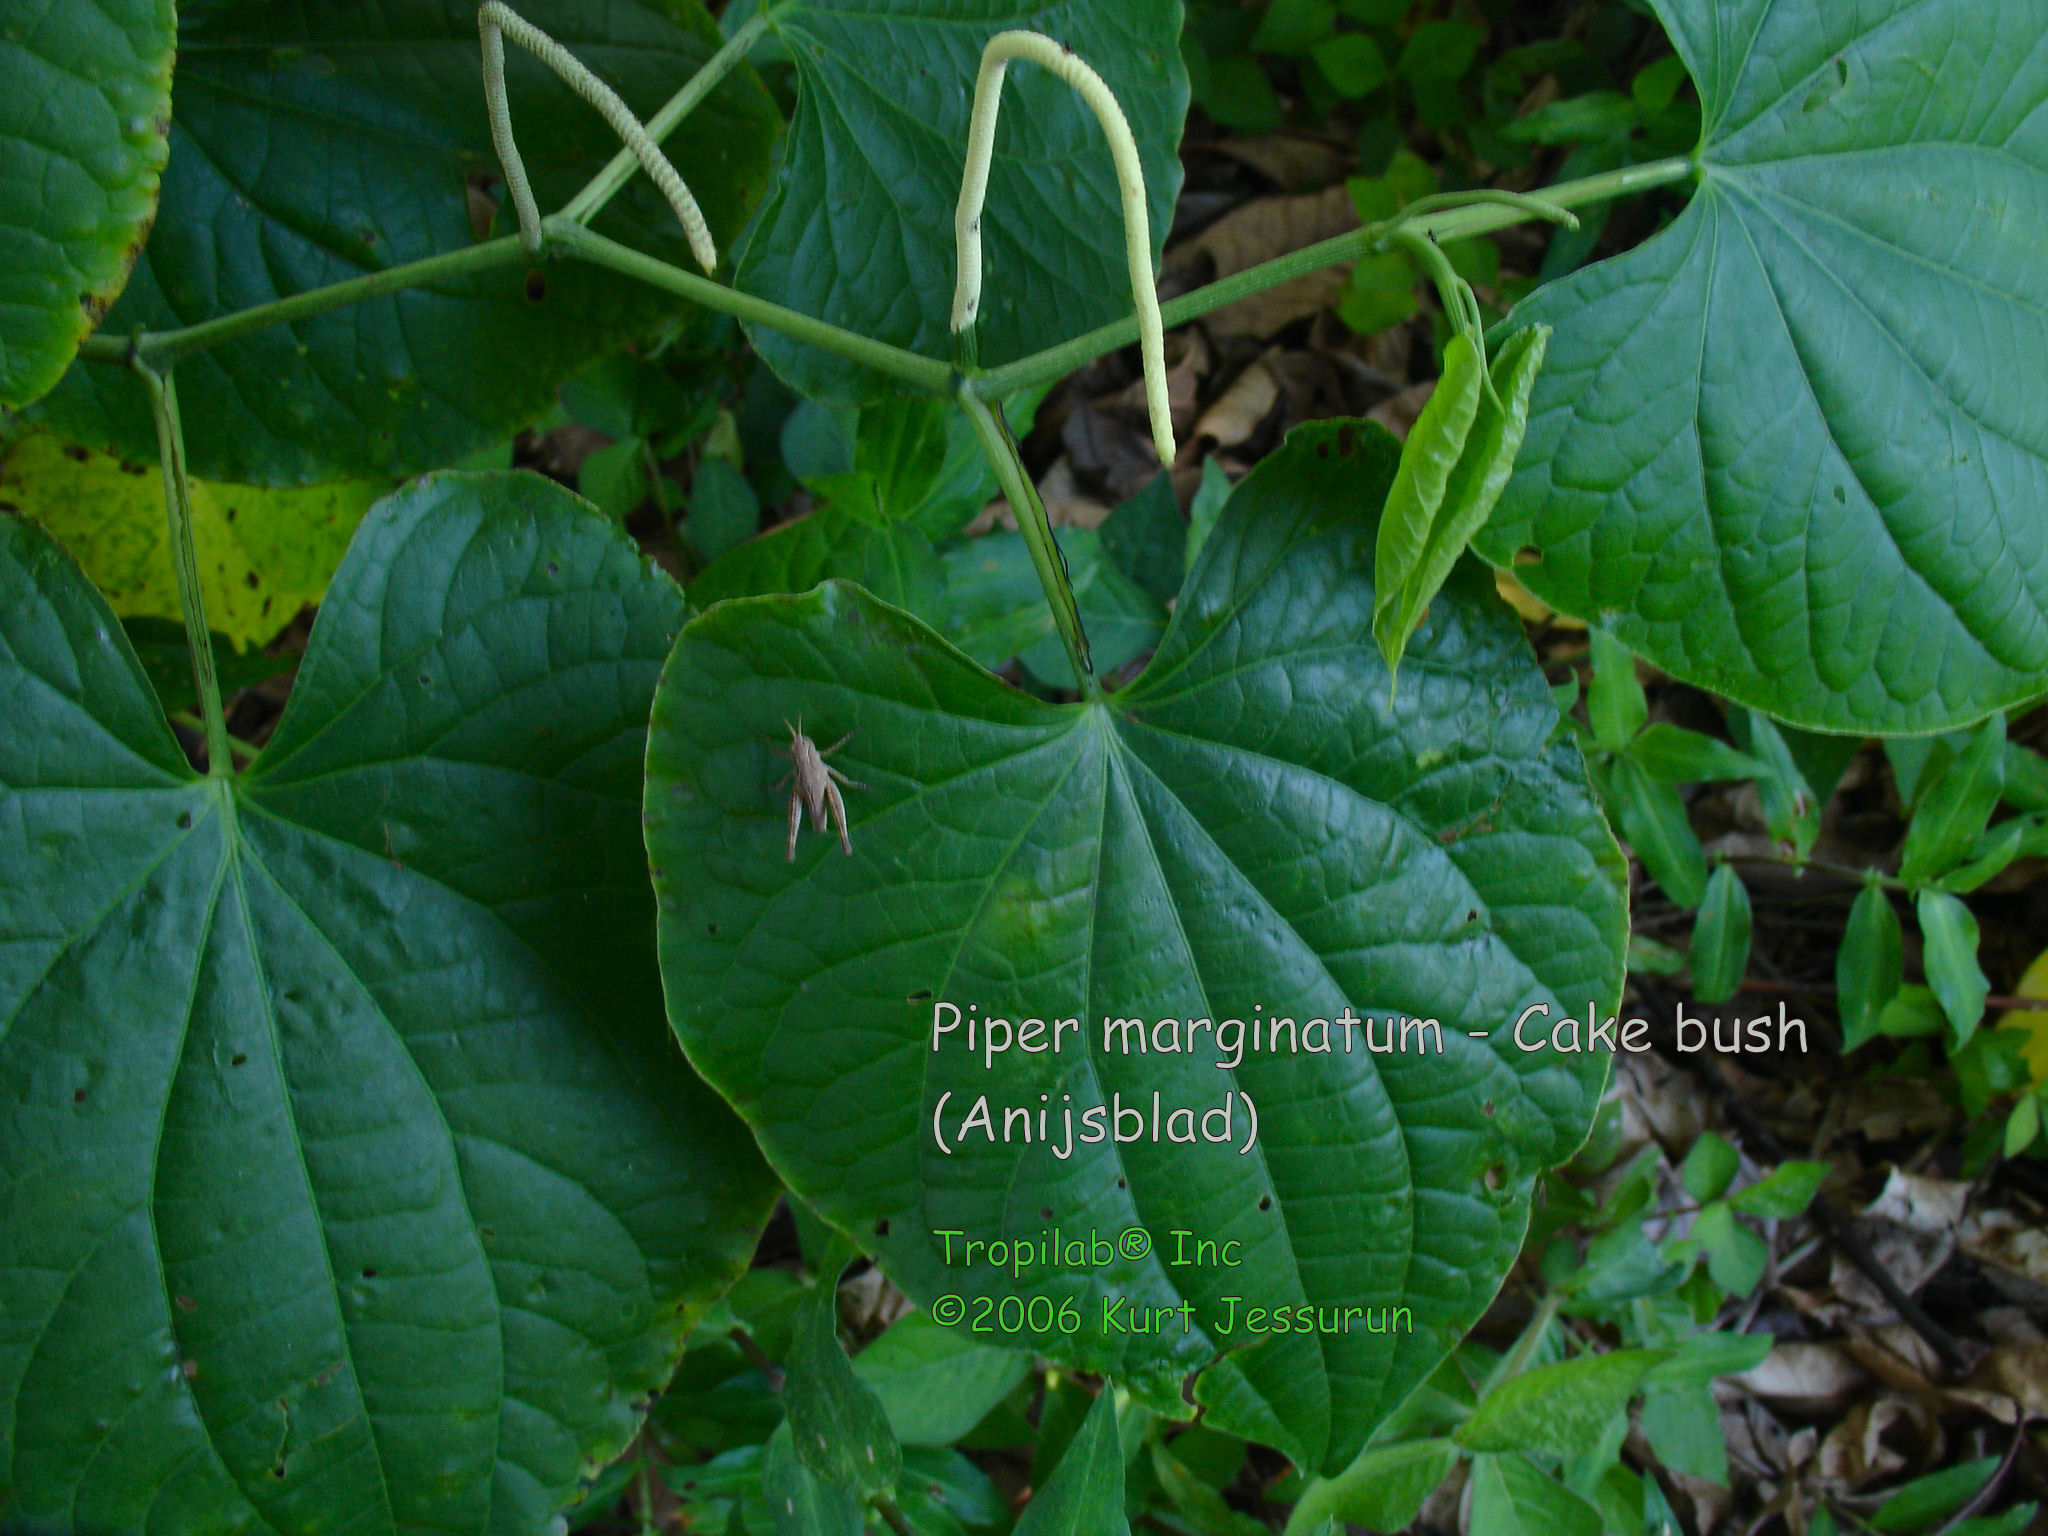 Piper marginatum - Cake bush with grasshopper